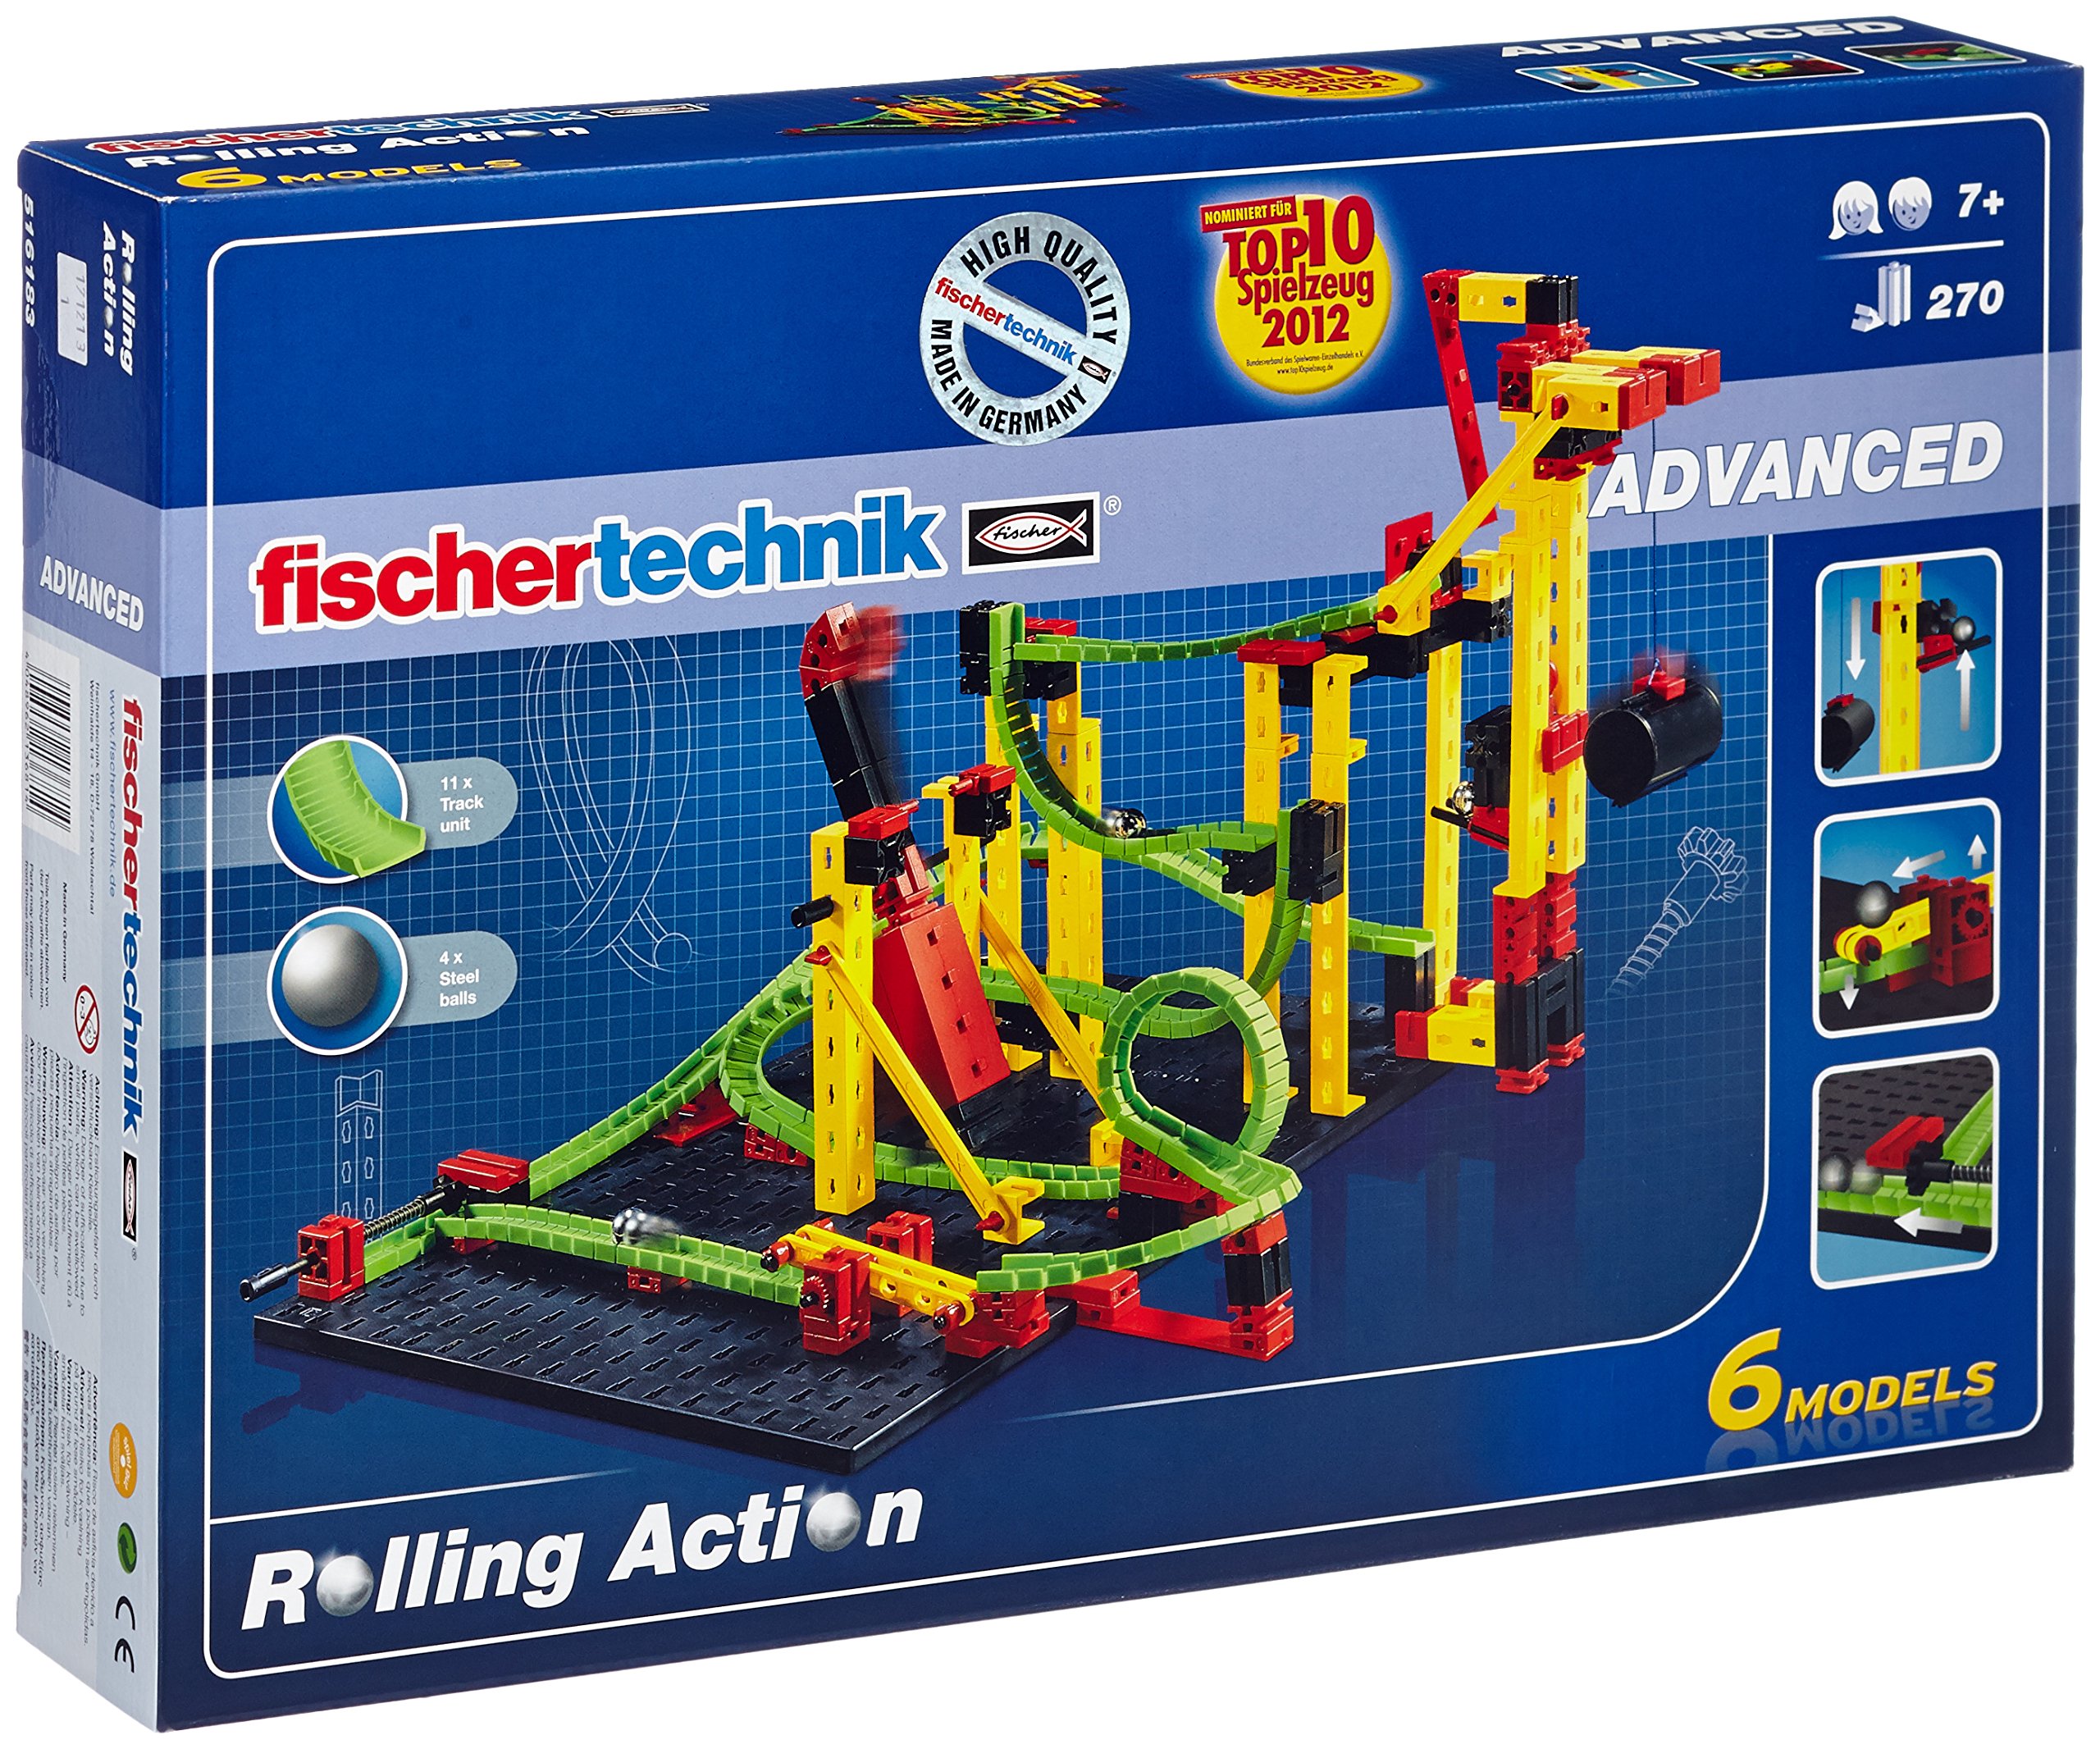 Fischertechnik Rolling Action Kit